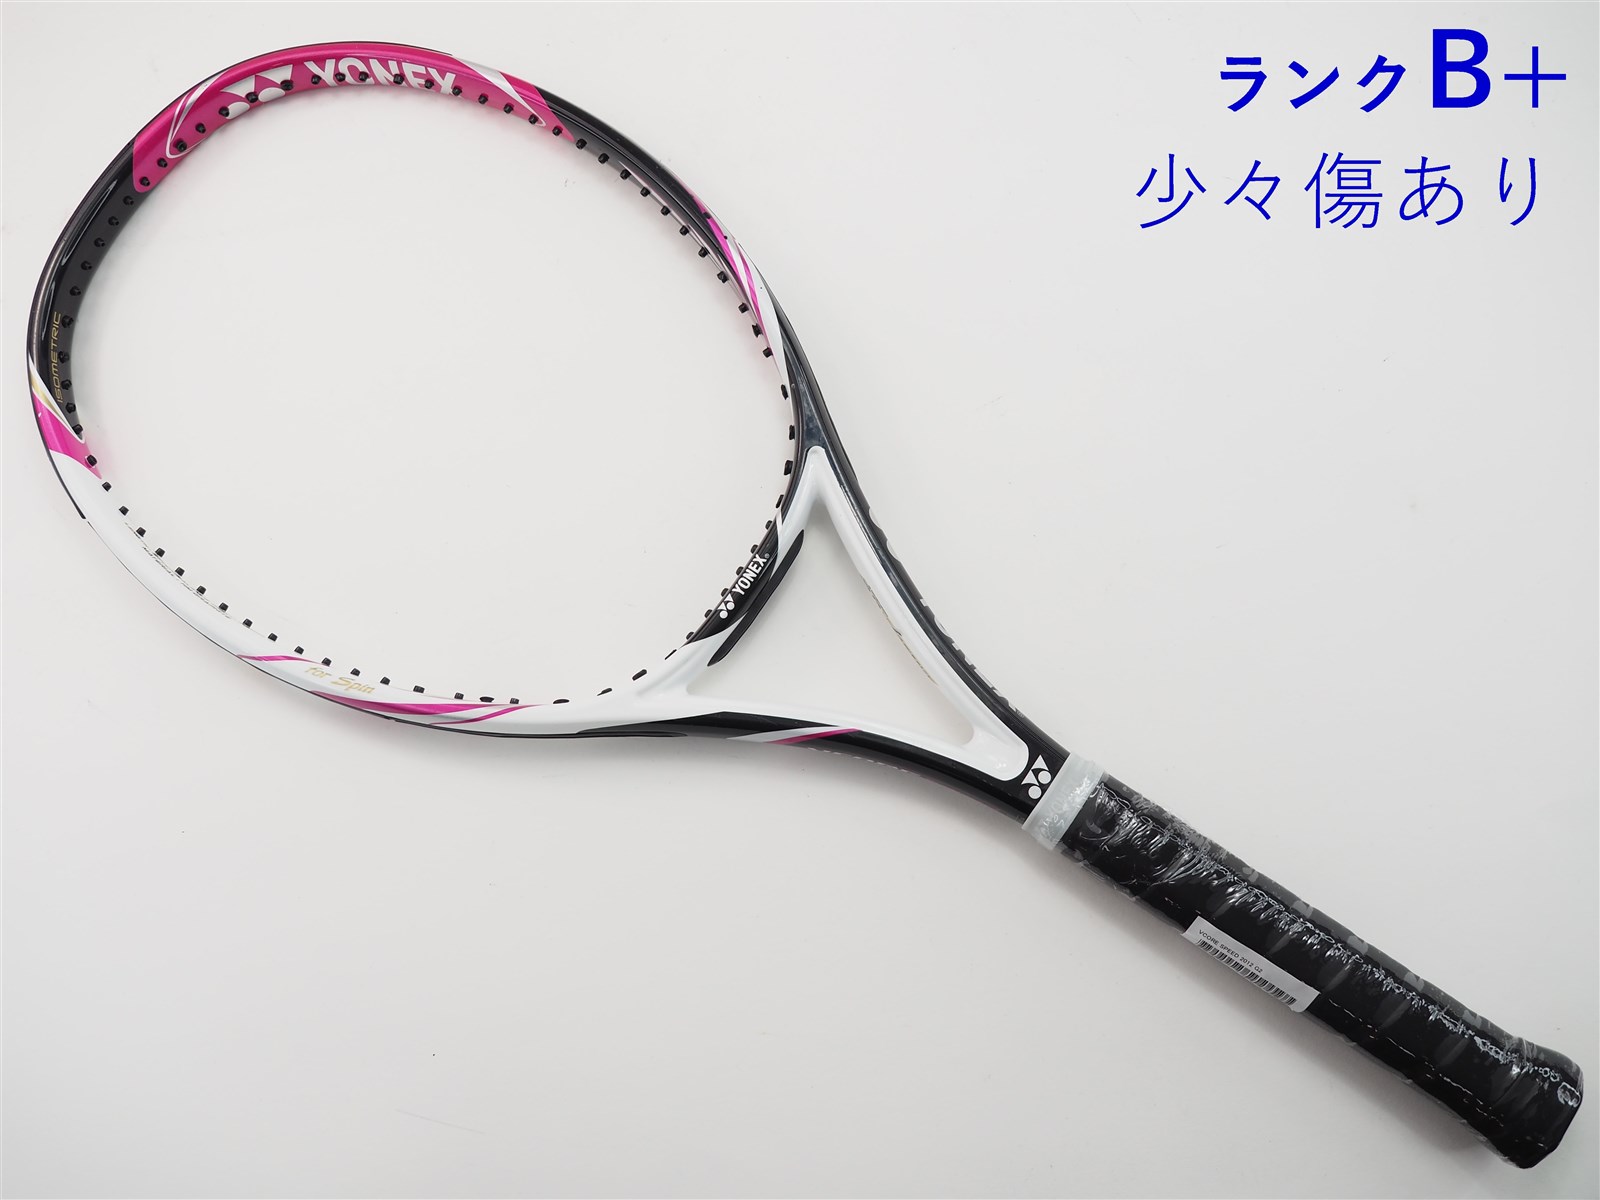 YONEX VCORE xi Speed G1 テニスラケット 硬式